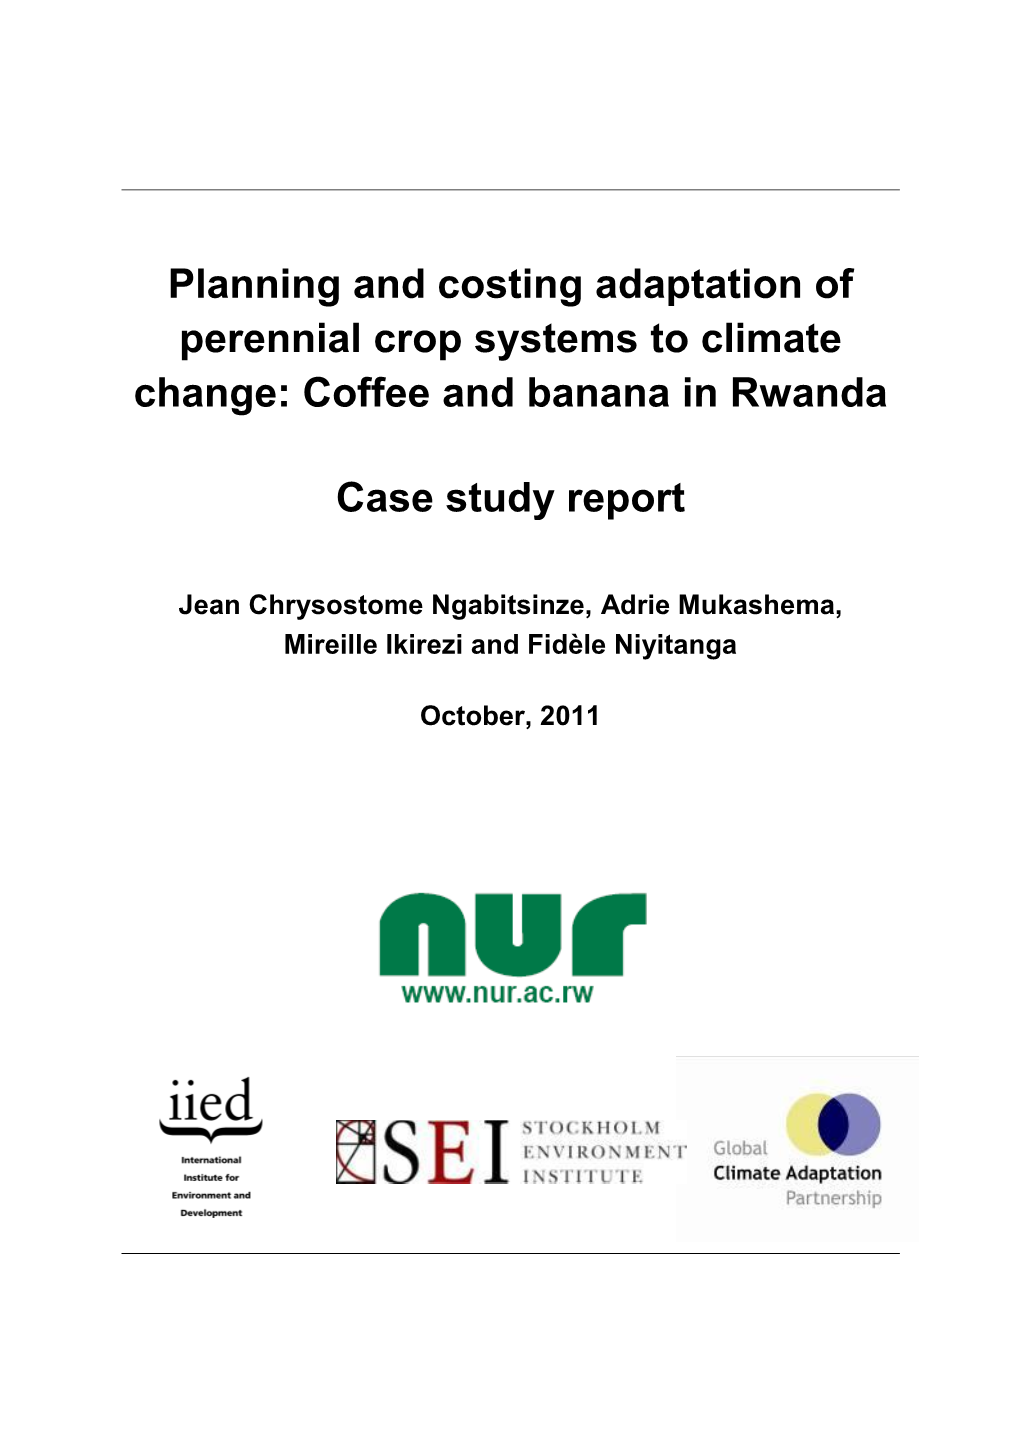 Coffee and Banana in Rwanda Case Study Report